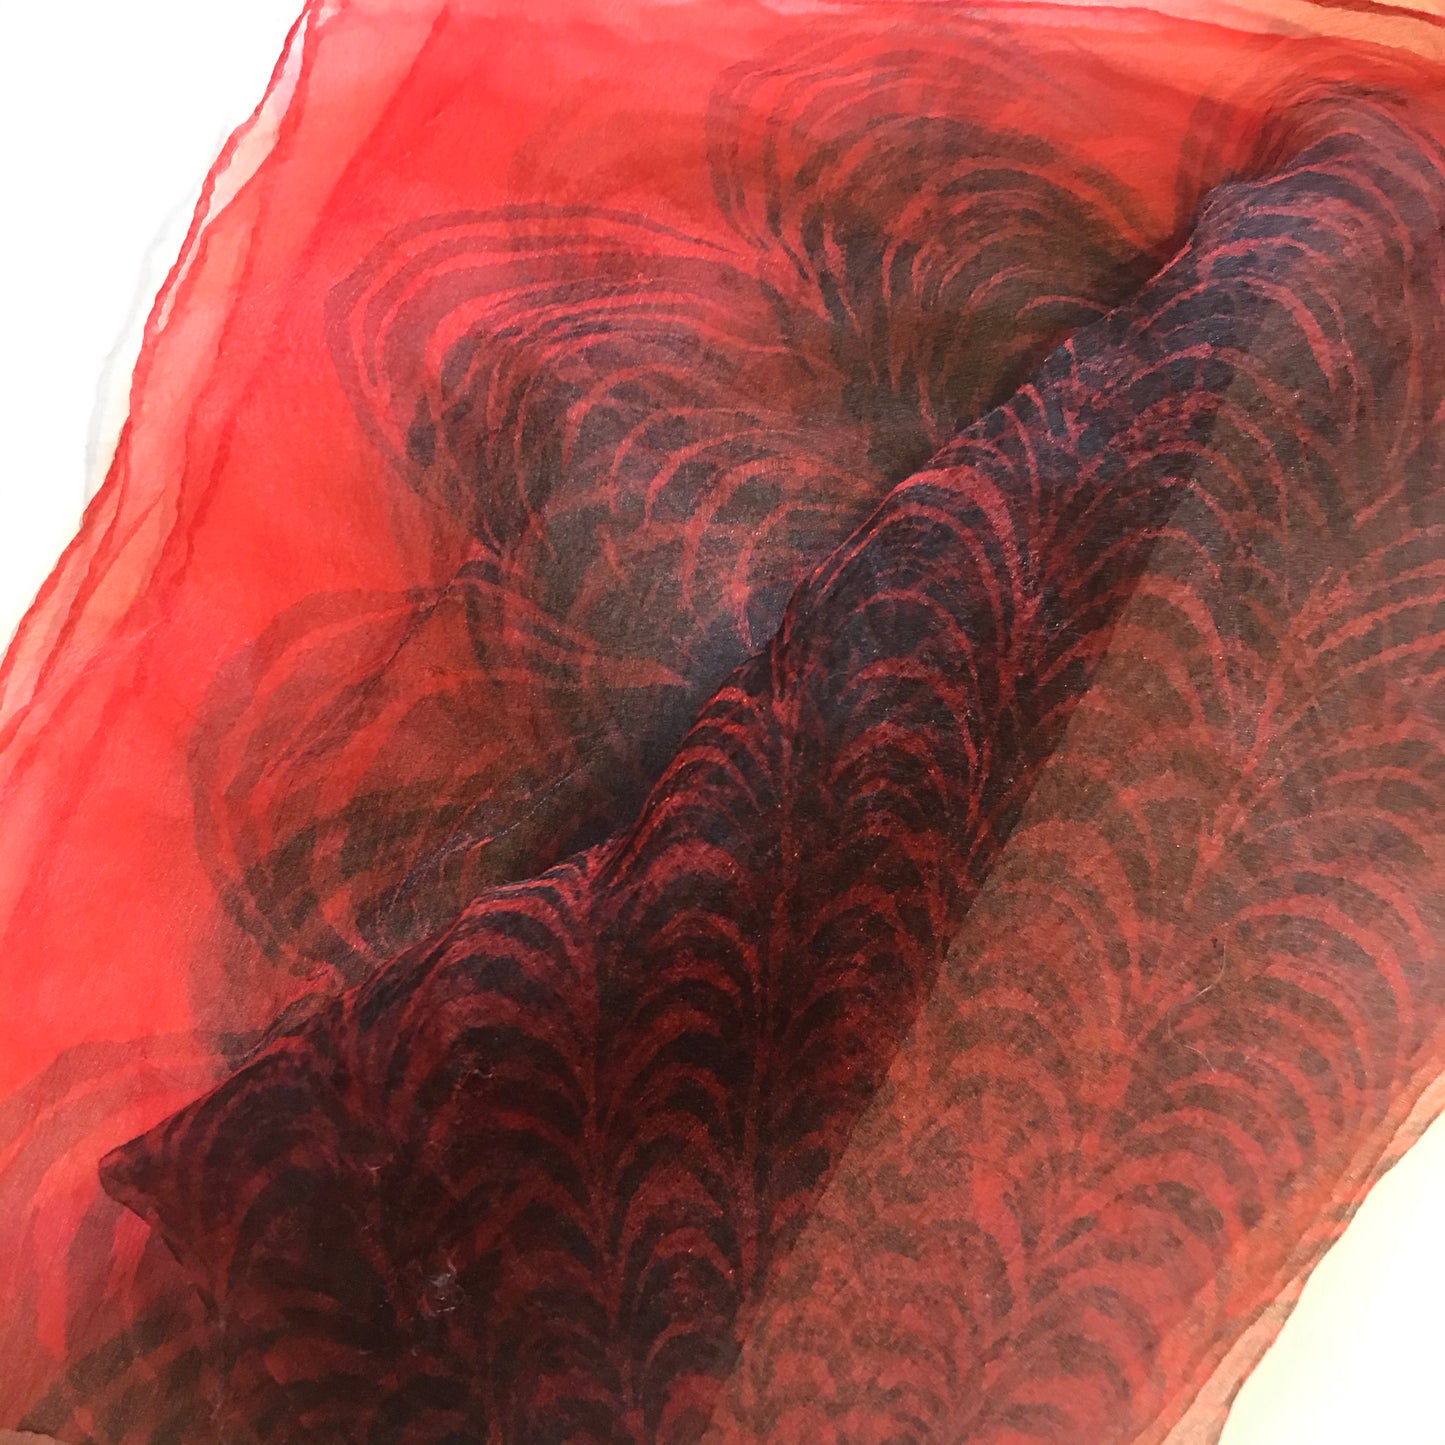 Red and Black Swirled Print Chiffon Scarf circa 1960s